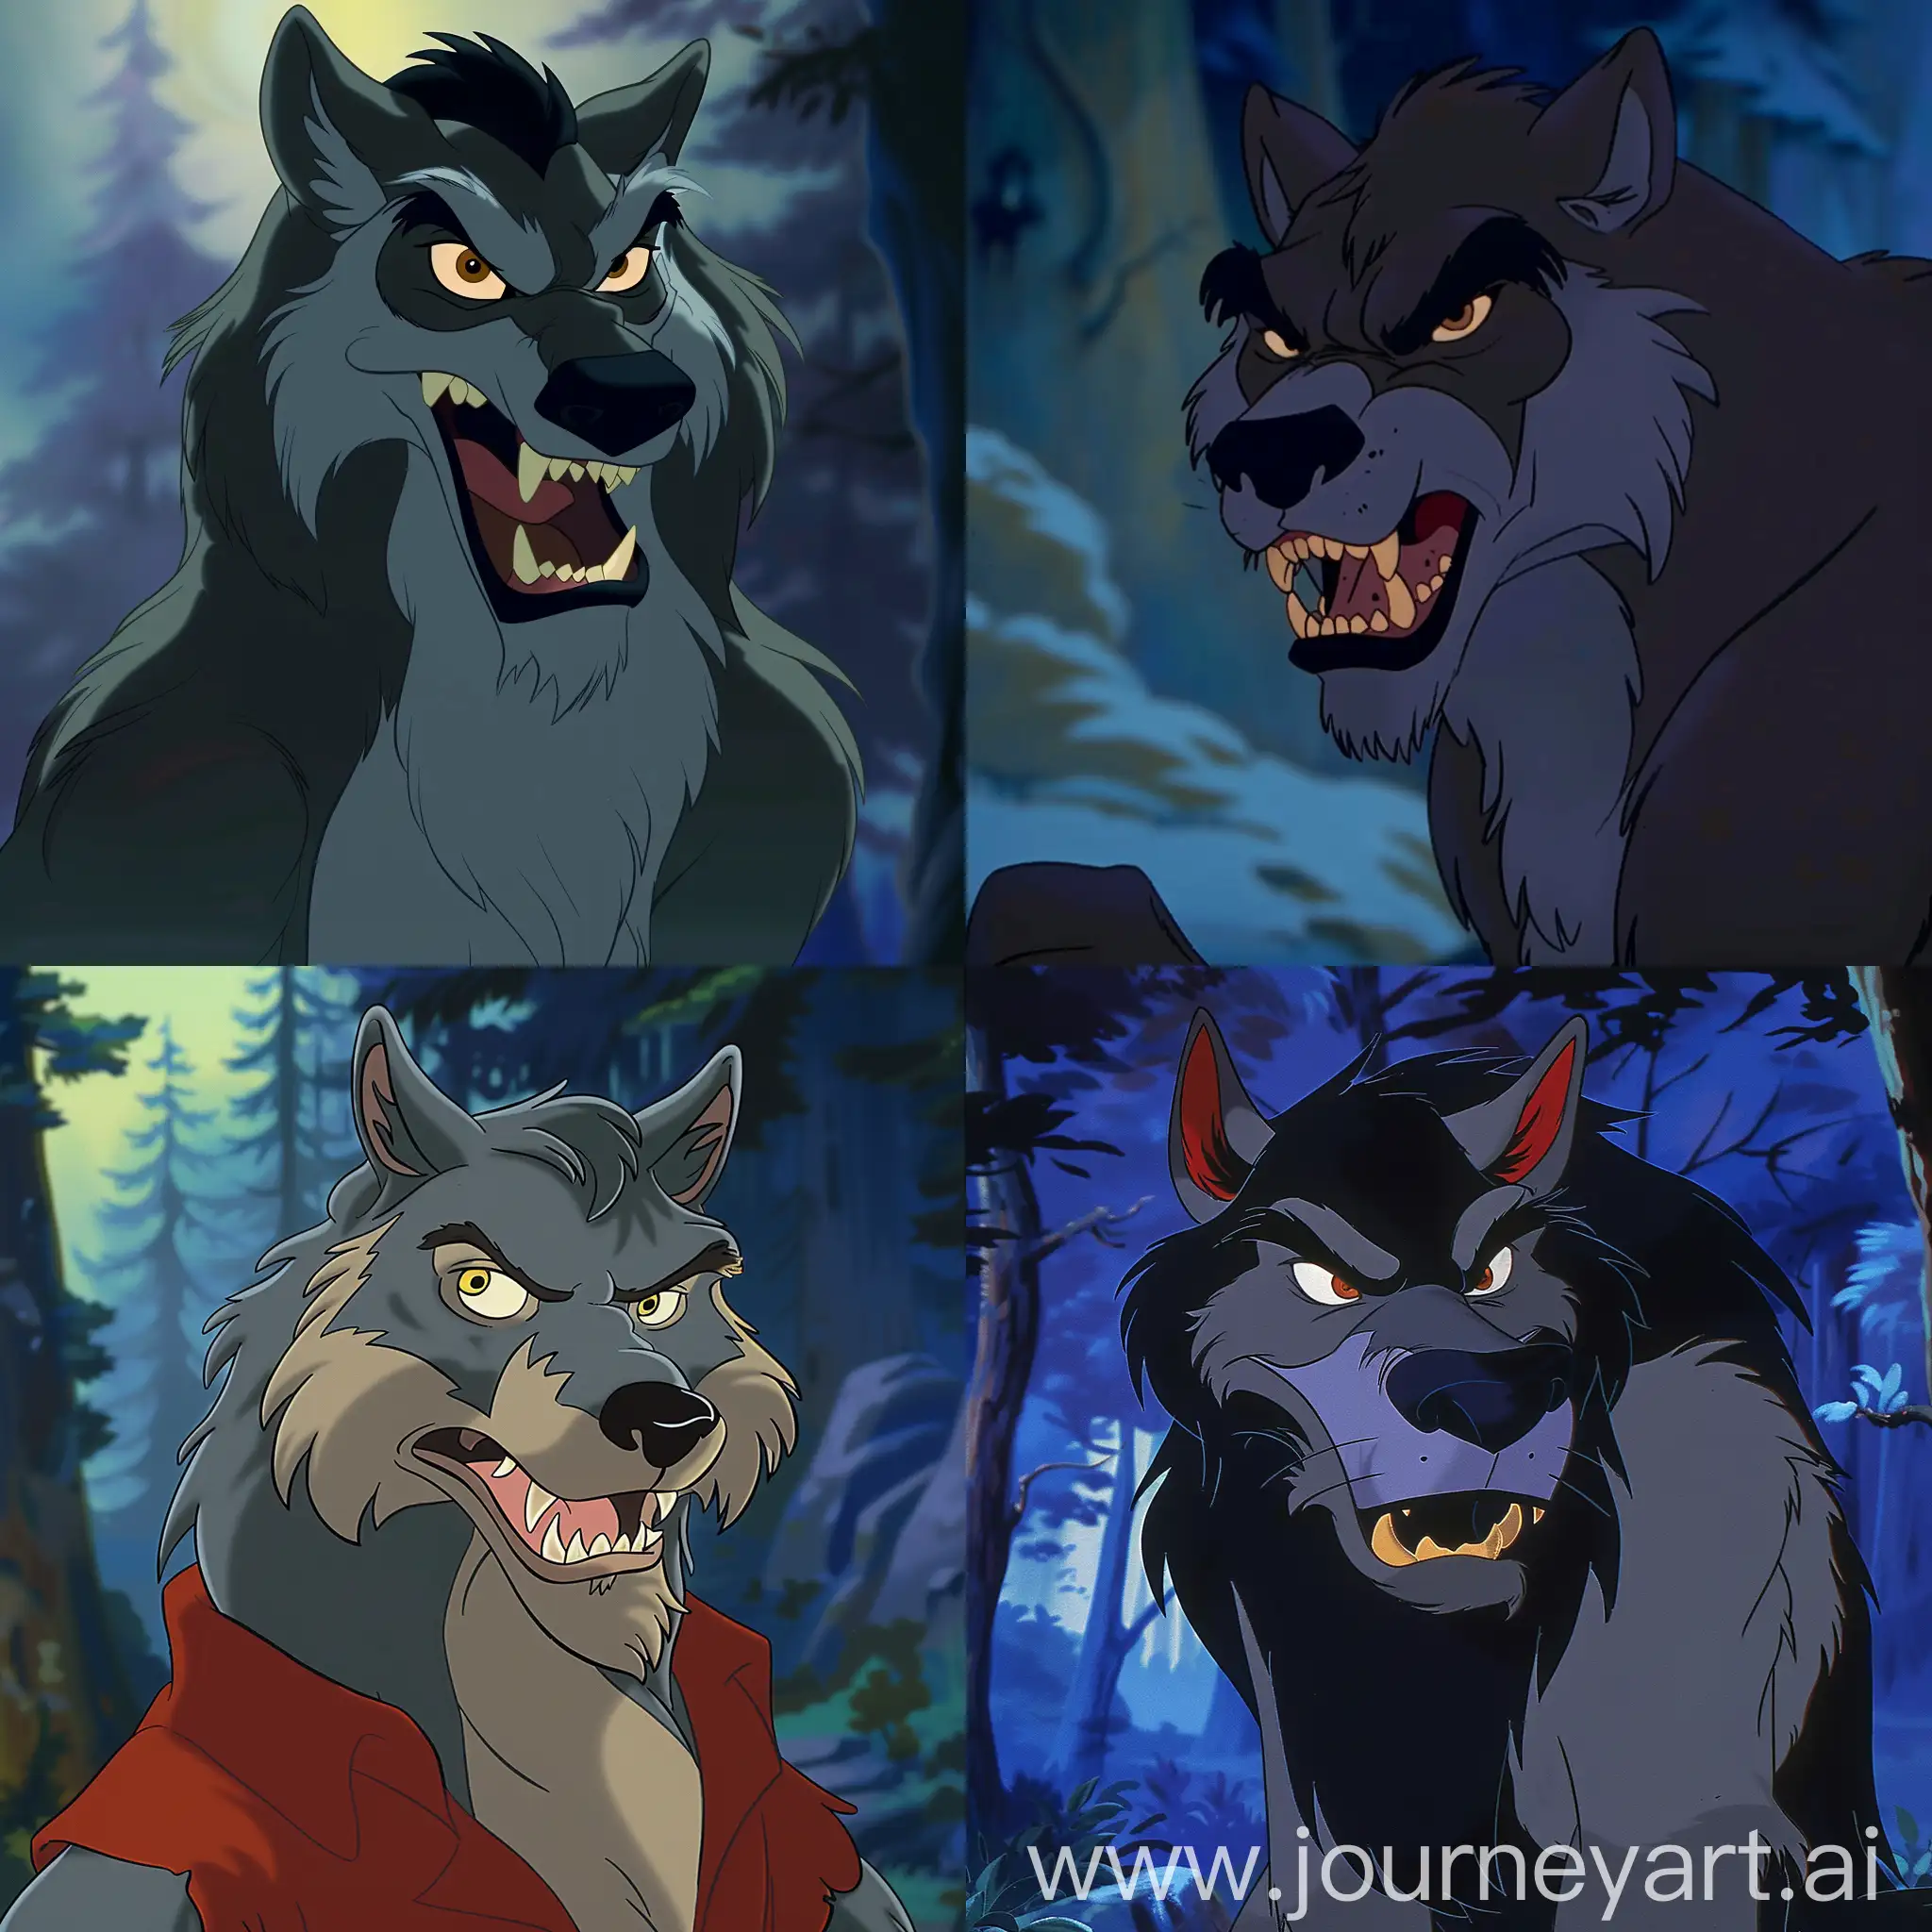 Retro-Cartoon-Disney-Werewolf-Art-90s-Nostalgia-and-Classic-Animation-Style